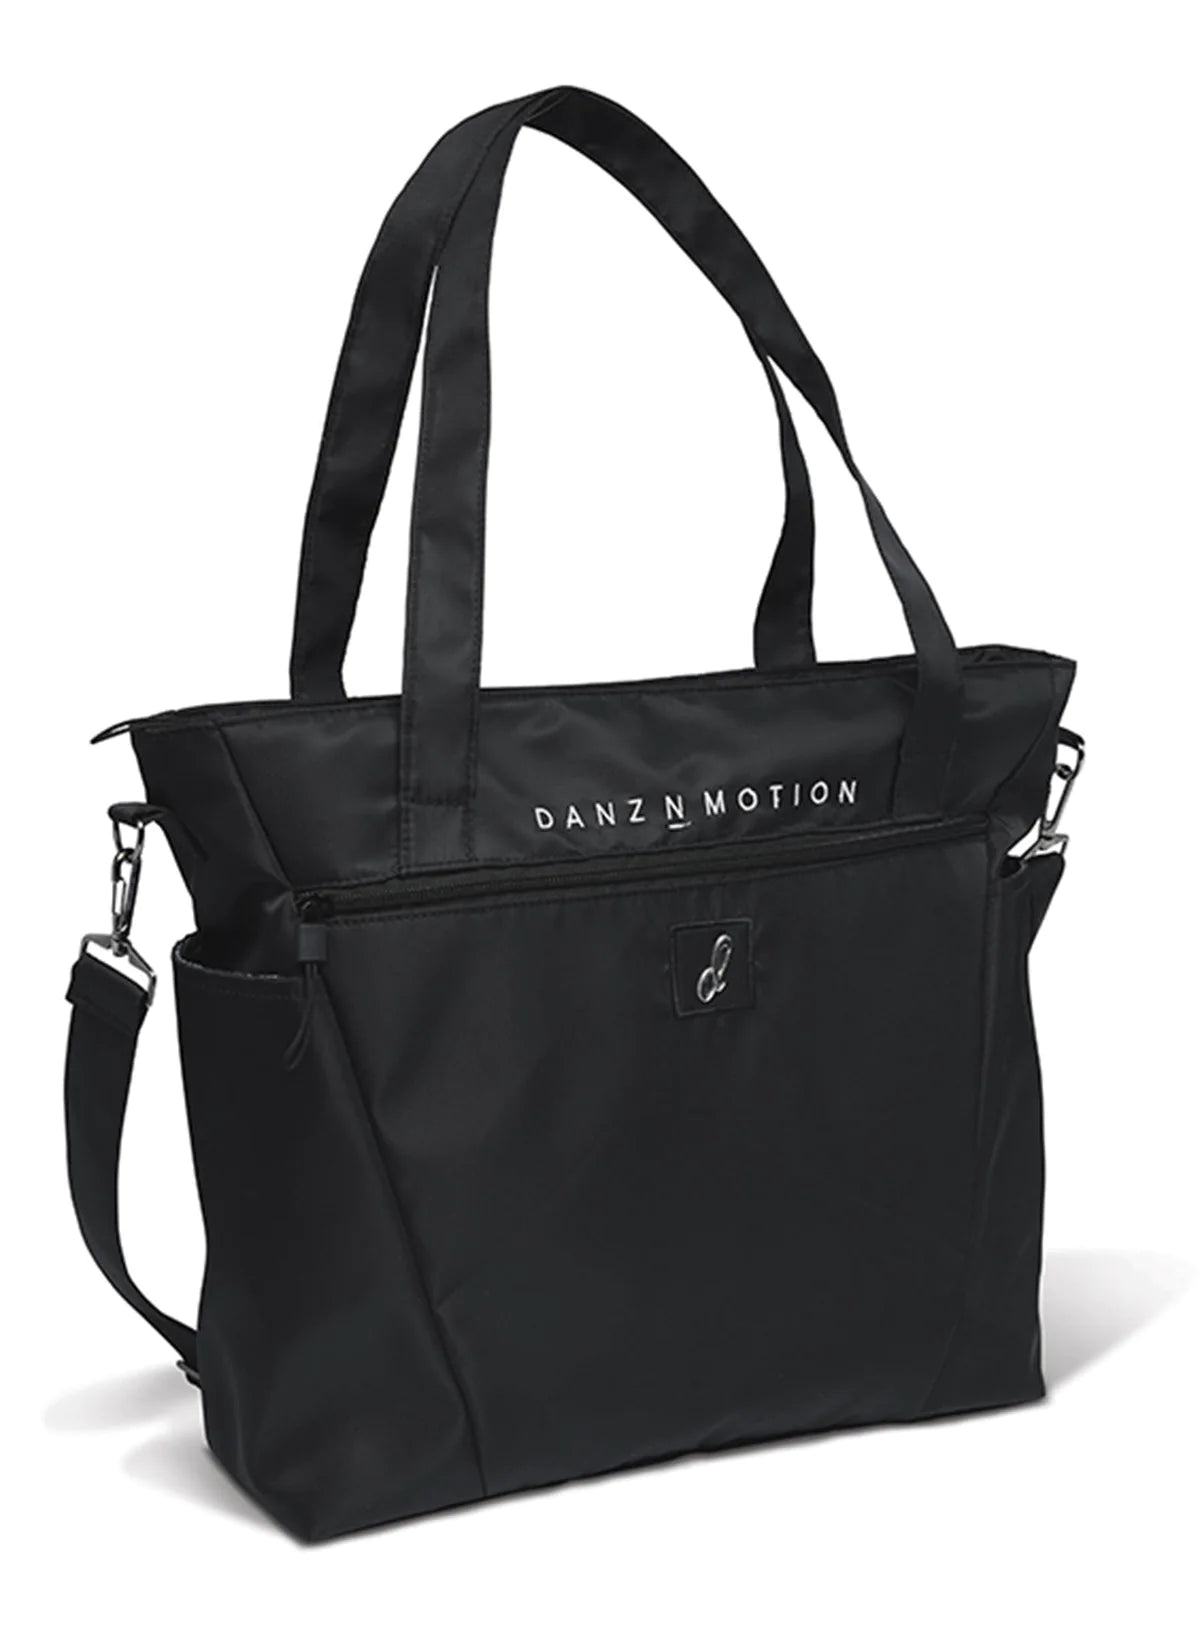 Danznmotion The Studio Bag